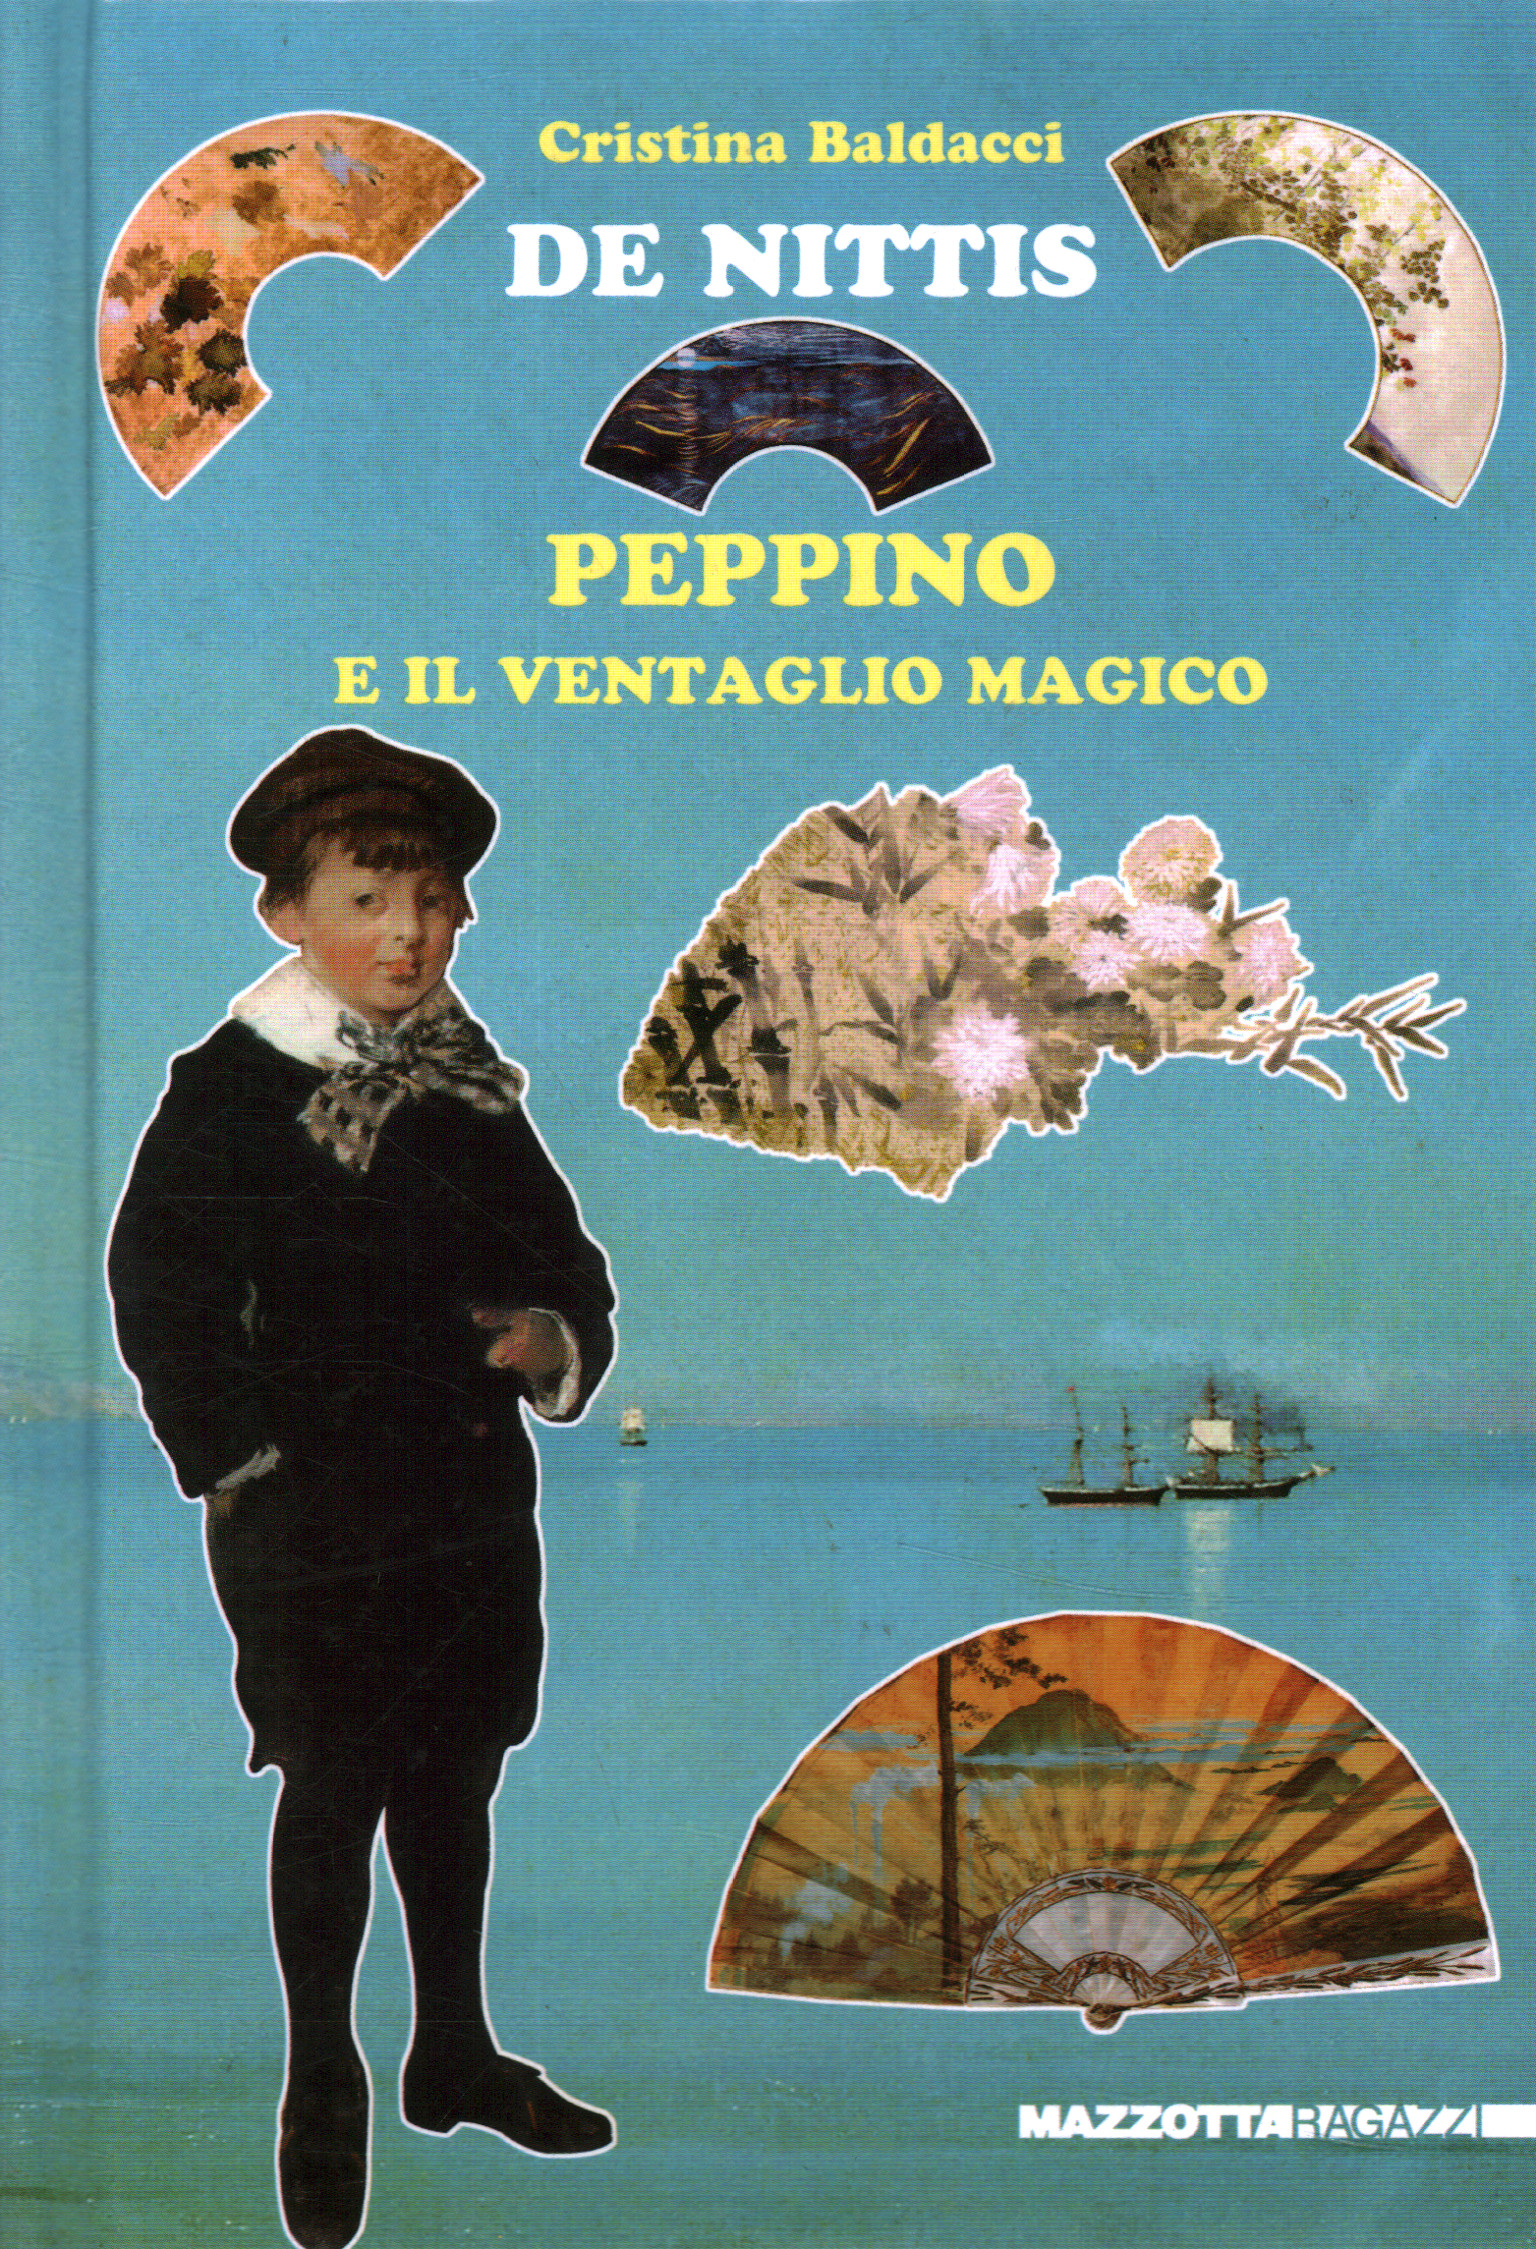 De Nittis. Peppino and the magic fan, Cristina Baldacci